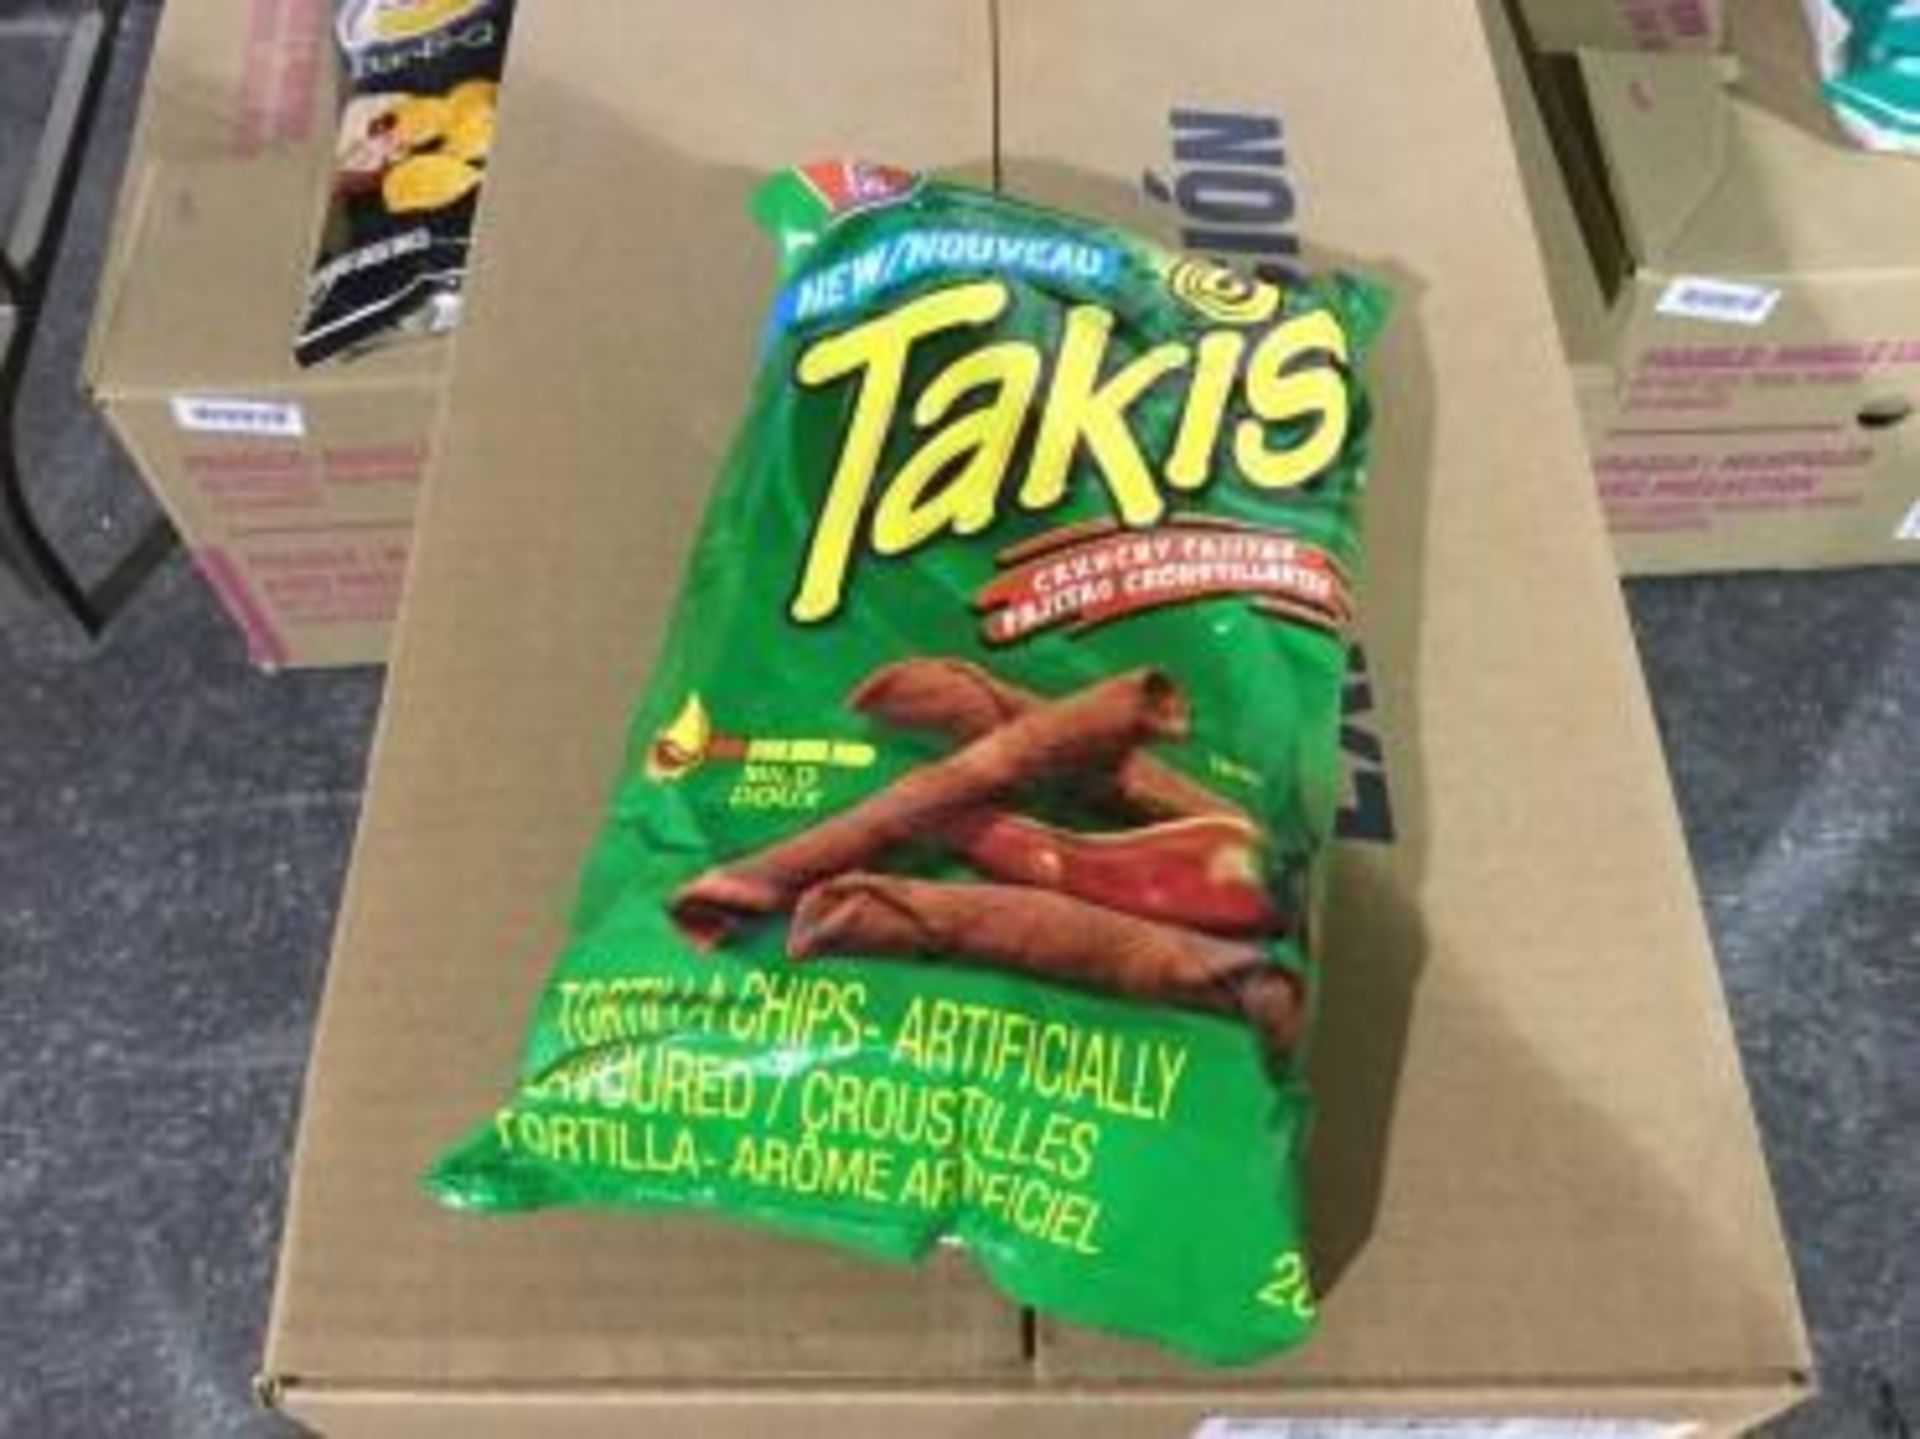 Case of 12 x 280g Takis Crunchy Fajitas chips